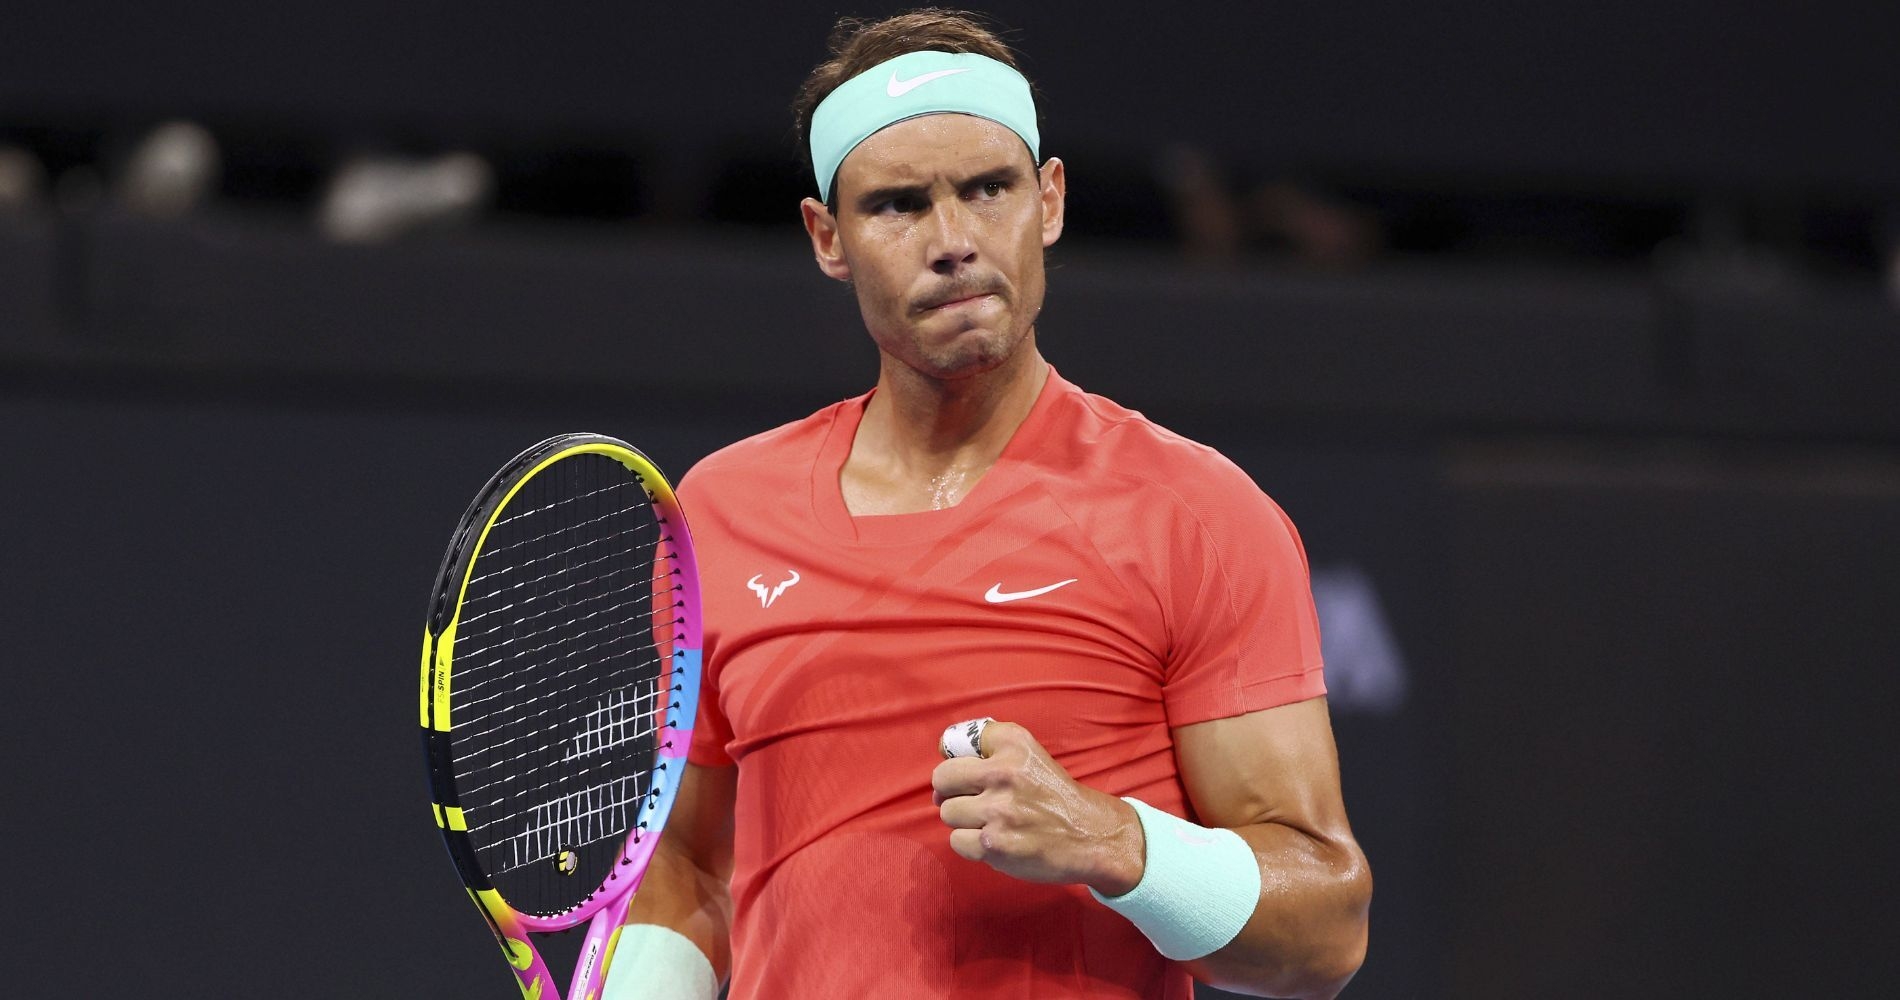 ATP Brisbane: Nadal through to quarter-finals - Tennis Majors